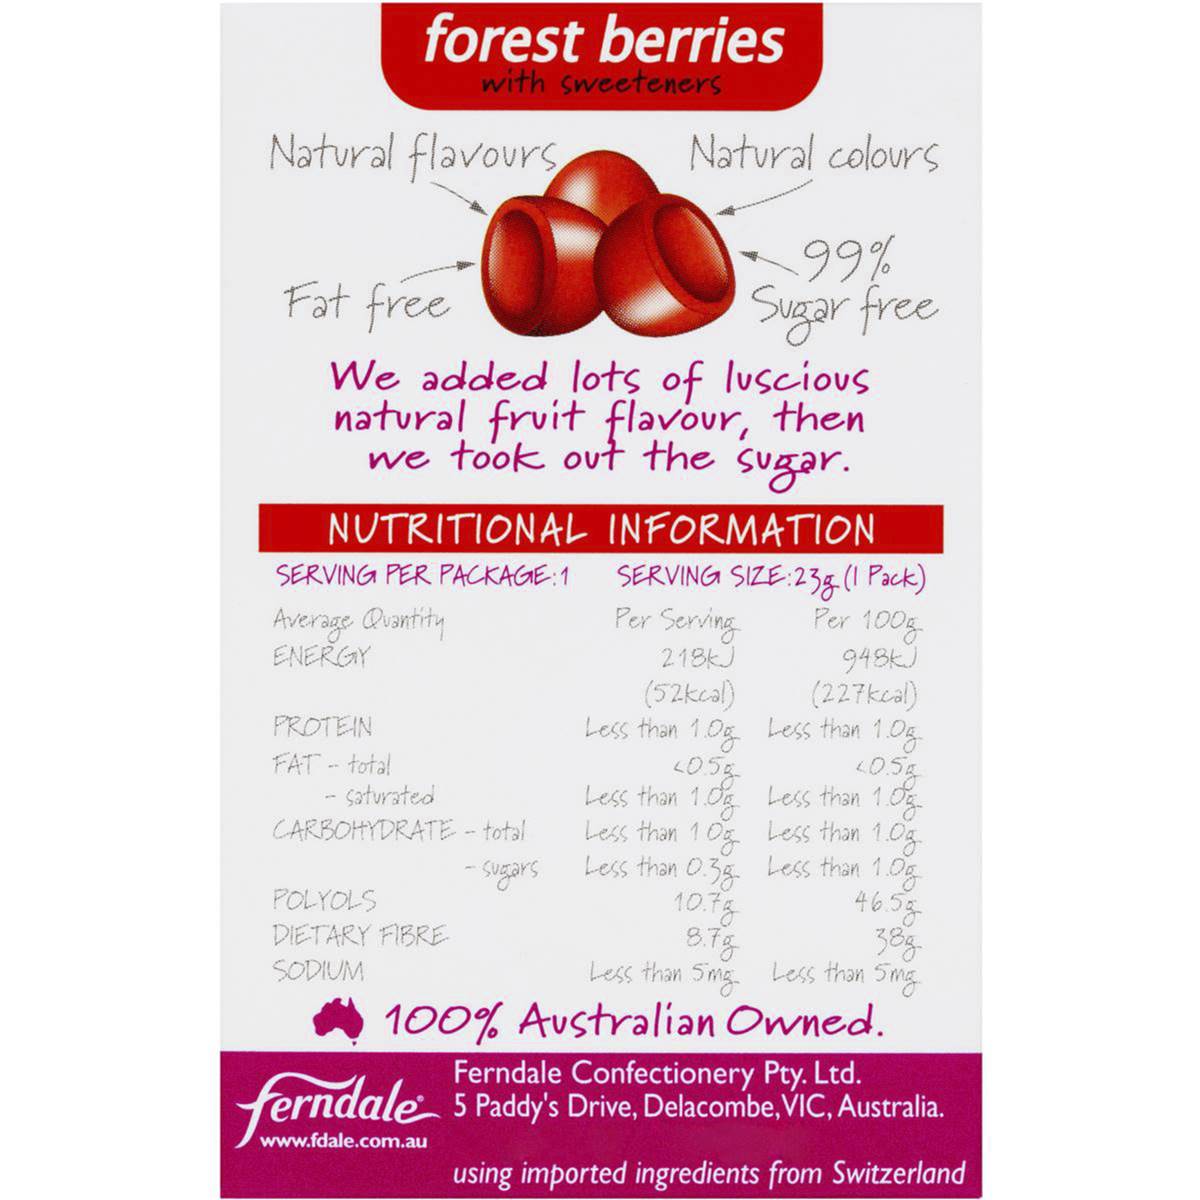 Jols Sugar Free & Fat Free Fruit Pastilles Forest Berries 23g